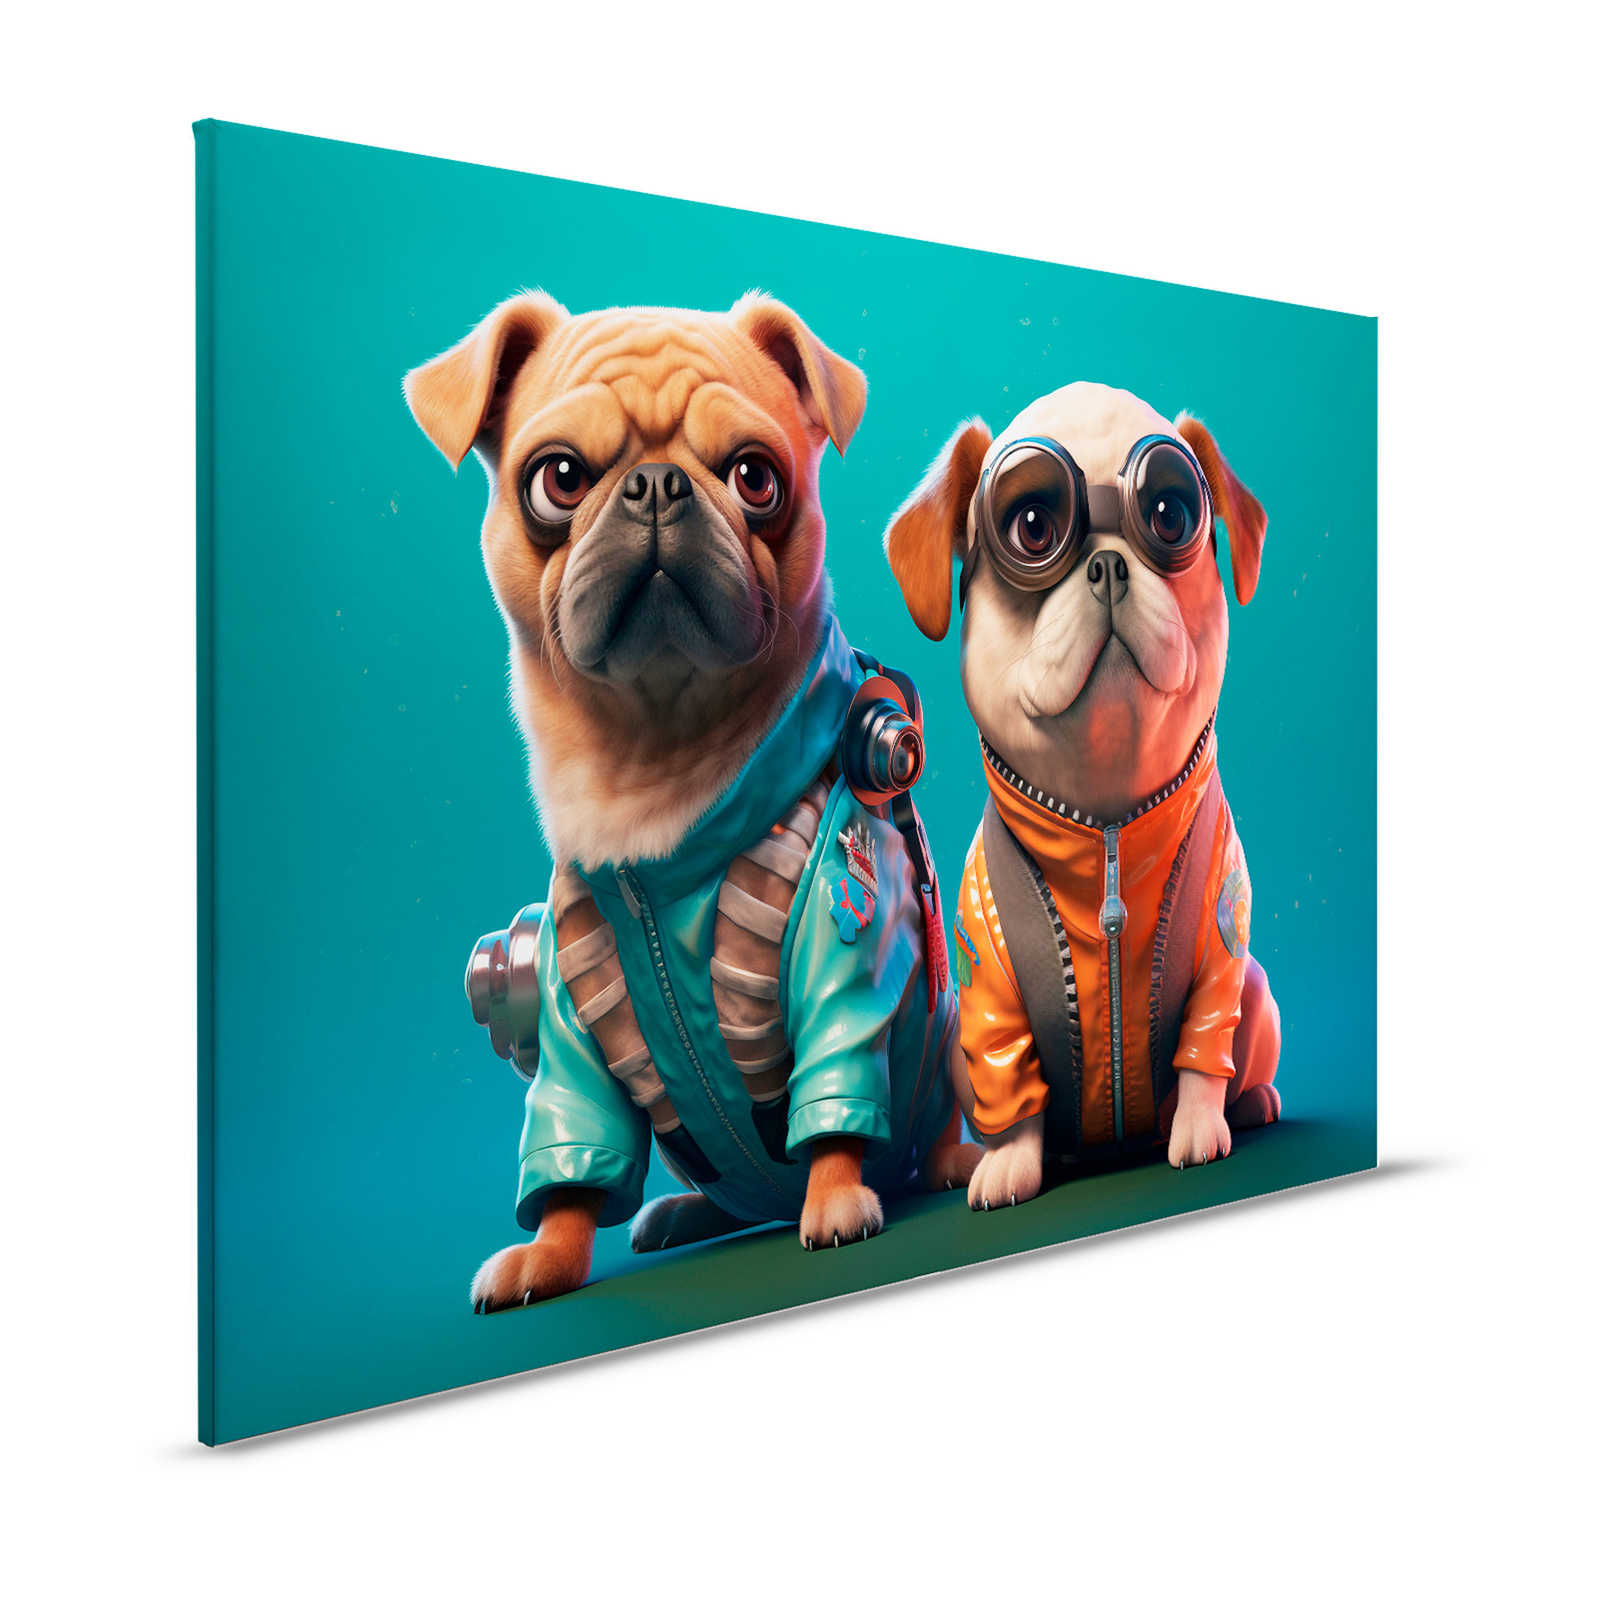 KI Canvas schilderij »Cute Dogs« - 120 cm x 80 cm
